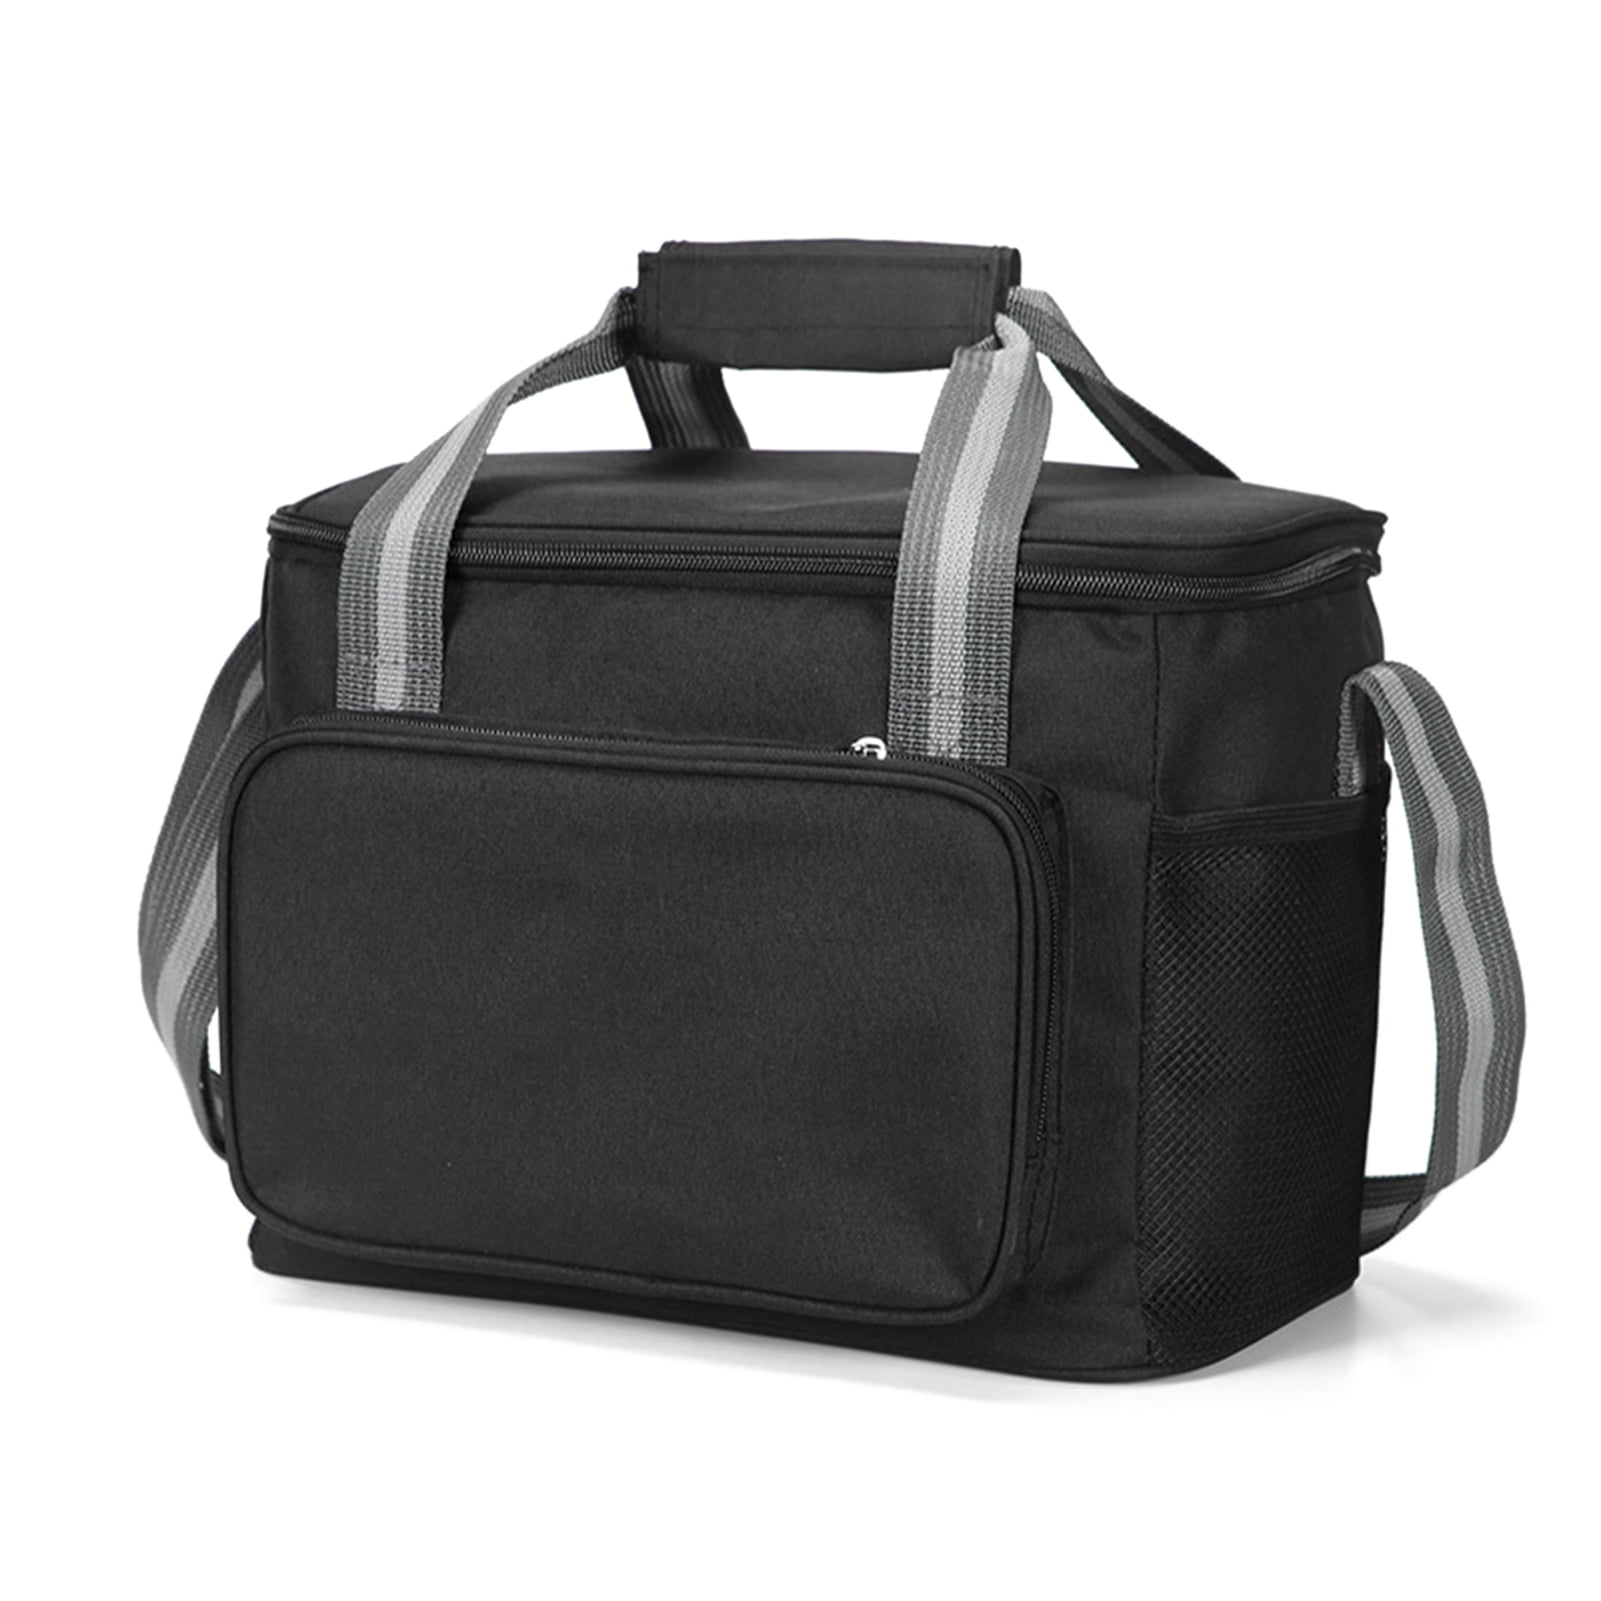 Gecheer 15L Cooler Bag Portable Insulated Cooler Bag for Travel Hiking ...